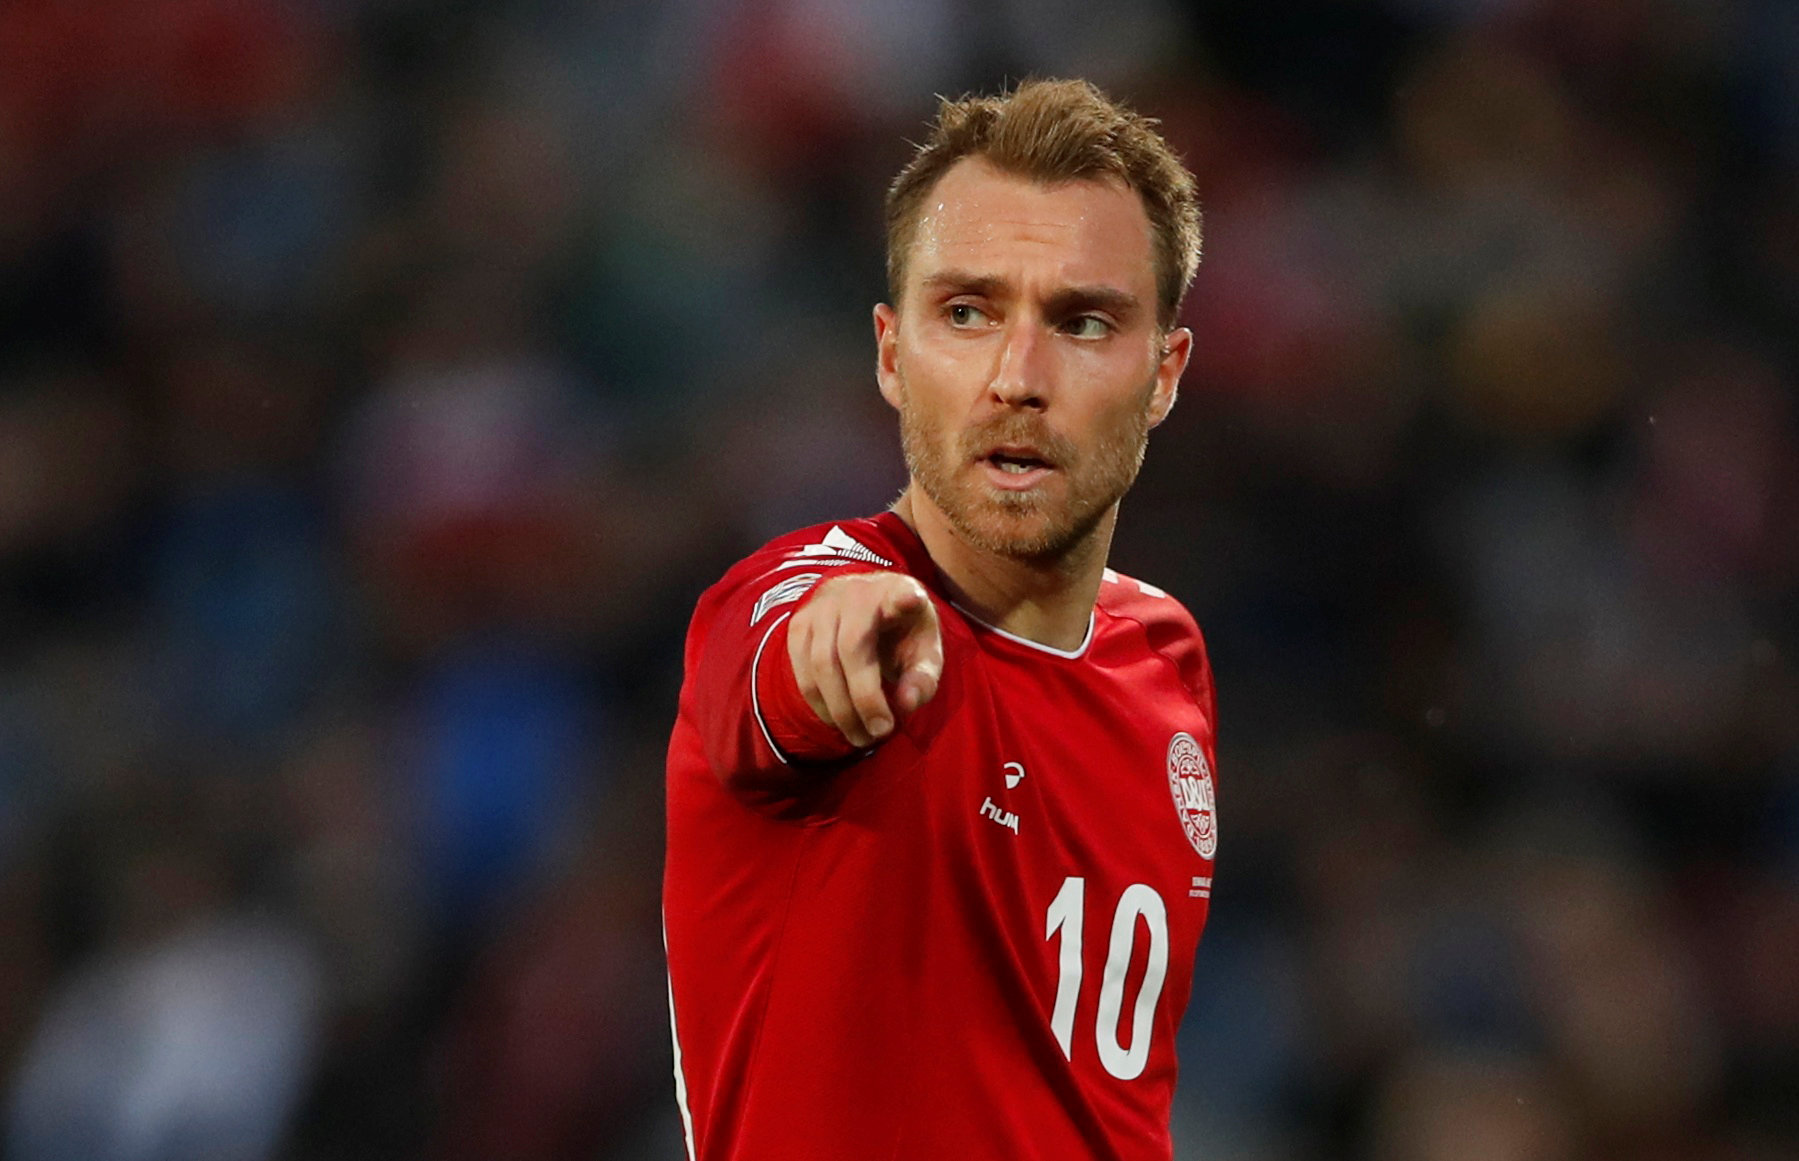 Football: Eriksen's brace leads Denmark to win over Wales